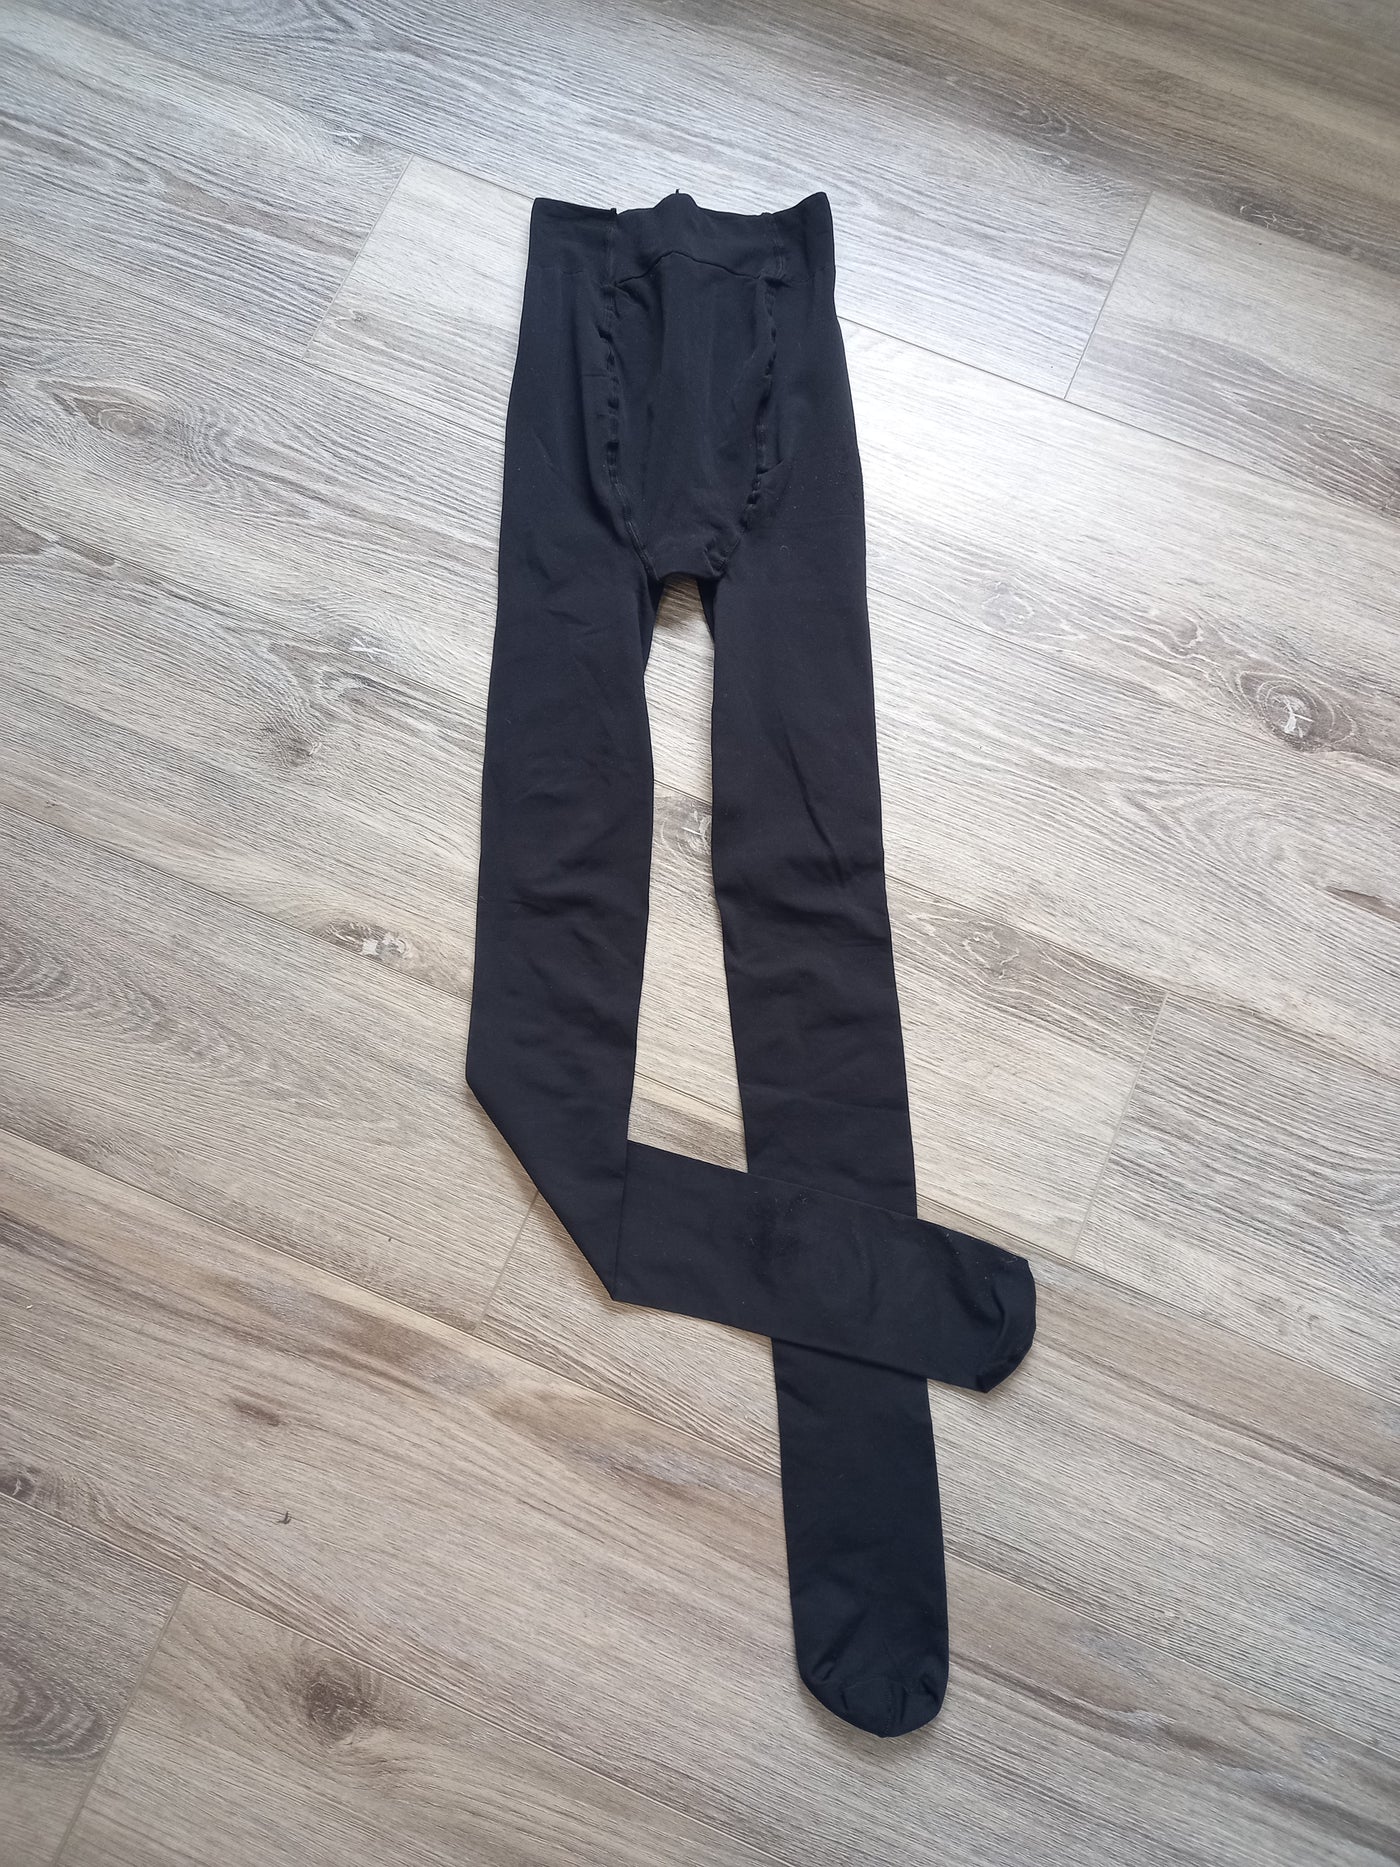 H&M Mama black overbump tights (20 denier) - Size M (Approx UK 10/12)